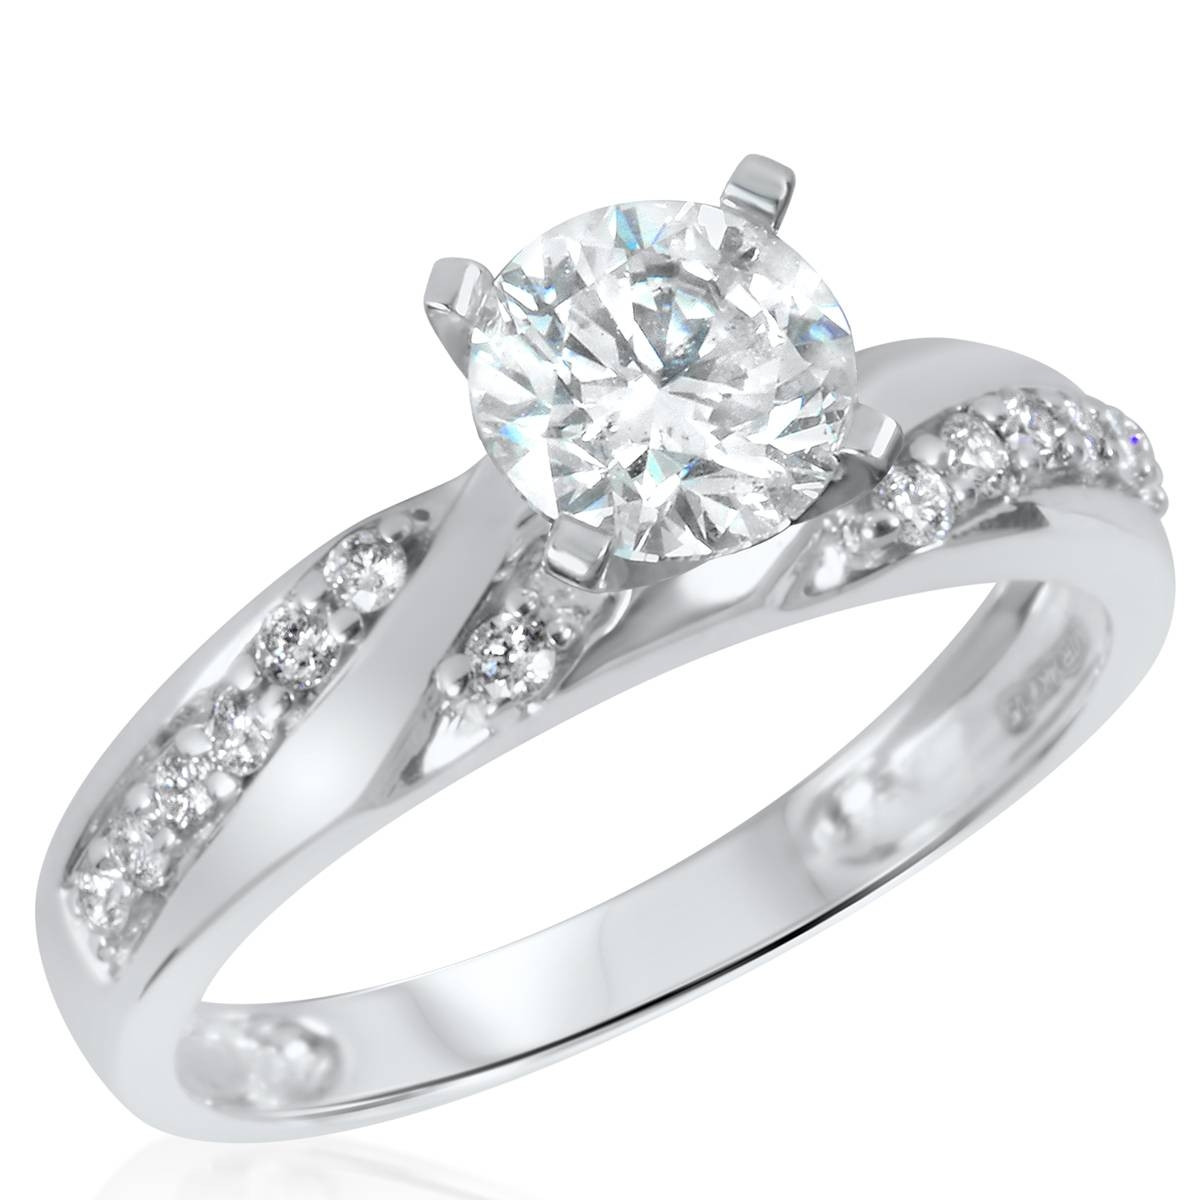 Affordable Wedding Ring Sets
 2019 Popular Cheap Diamond Wedding Bands